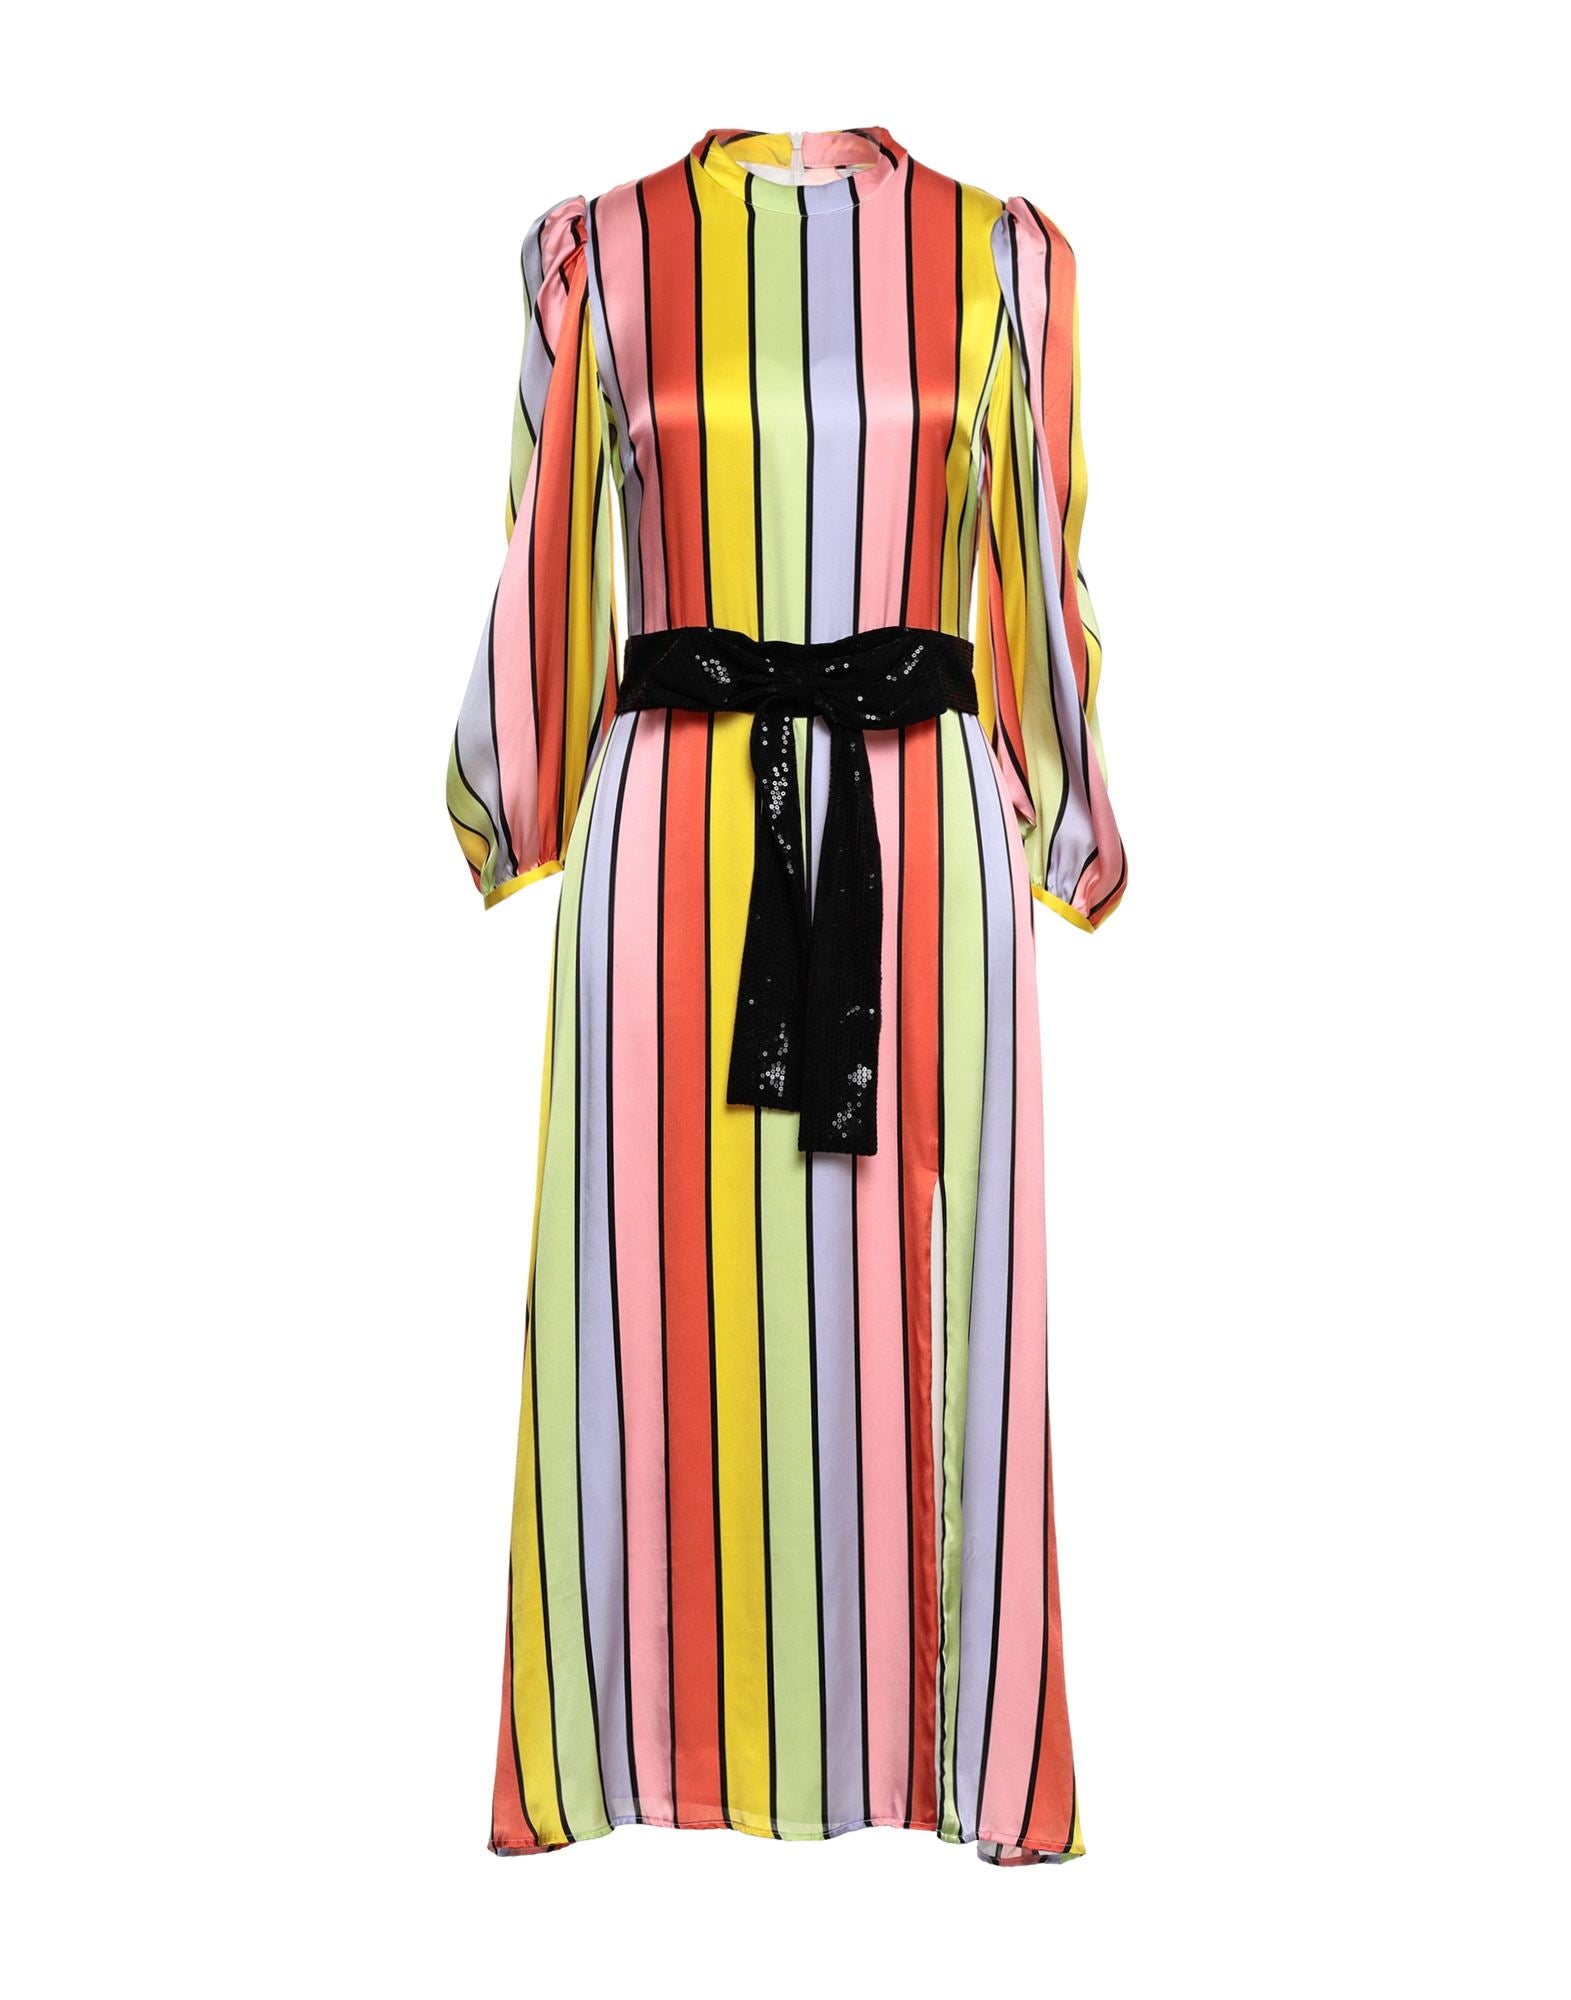 RENT Olivia Rubin Seraphina Resort Dress (RRP £380) – One Hit Wonders